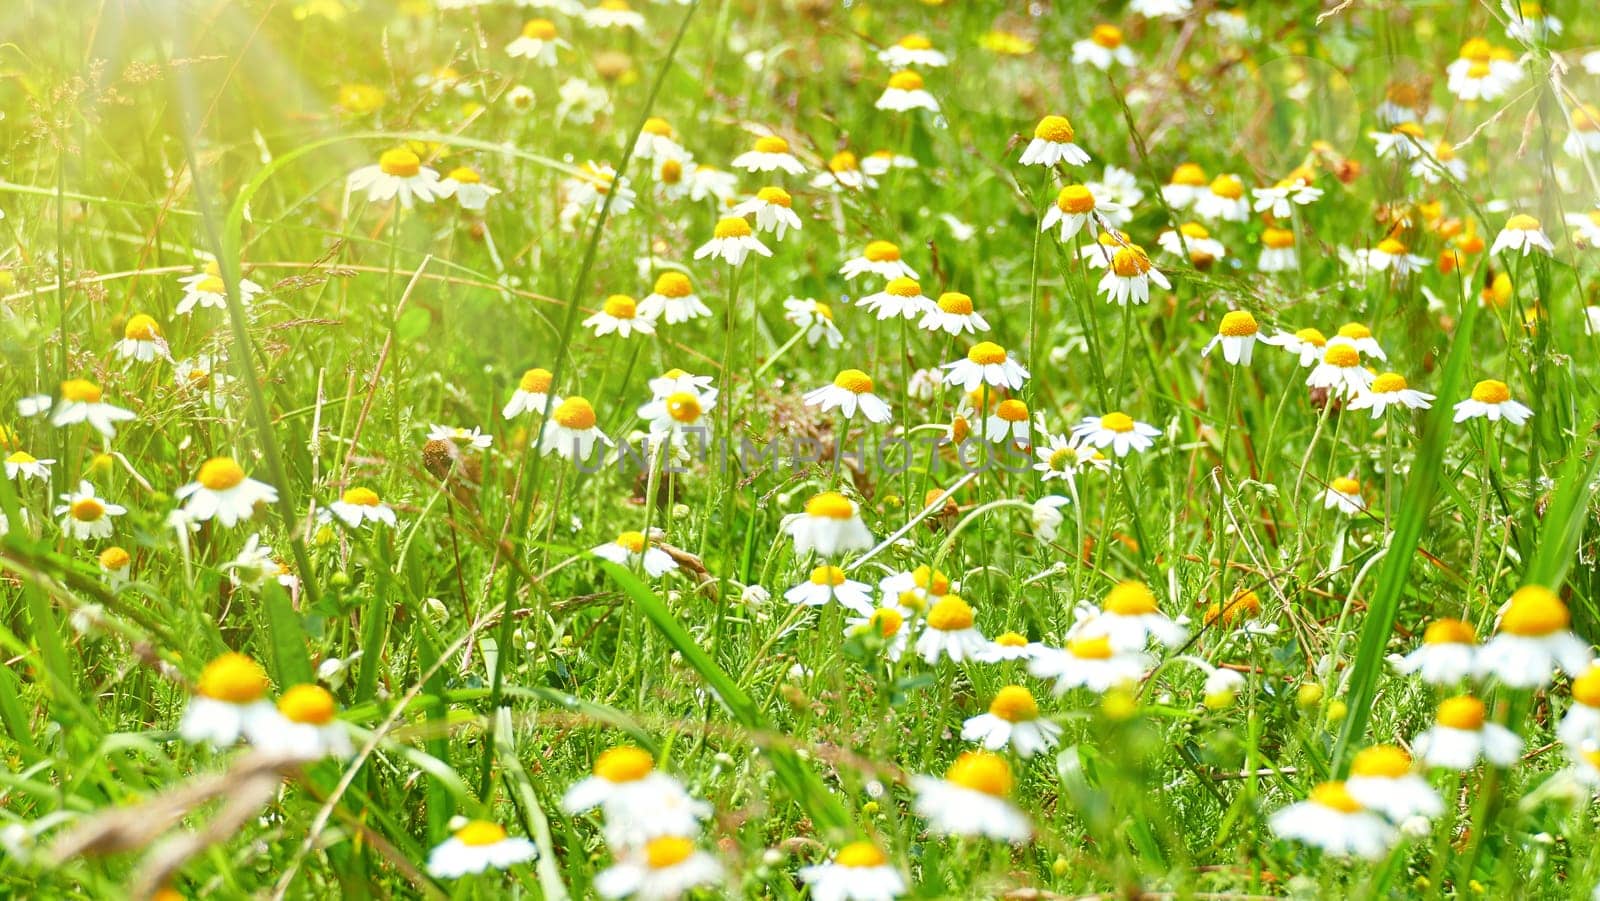 Field of daisies in spring by XabiDonostia